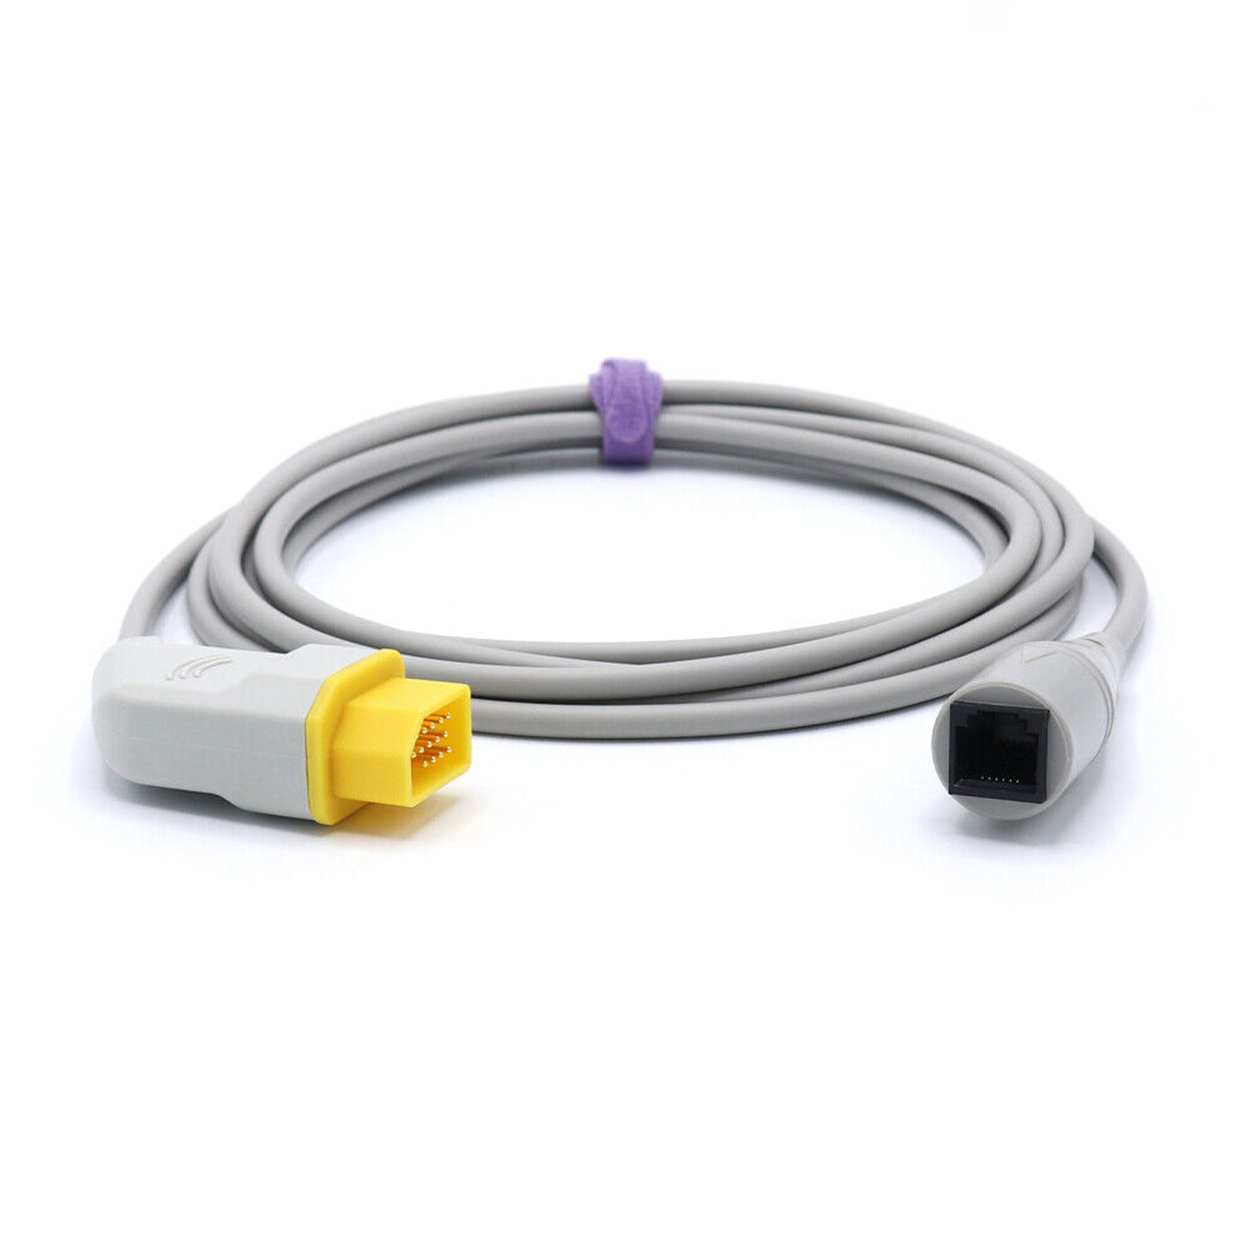 Nihon Kohden Medex - Abbot IBP adaptor cable